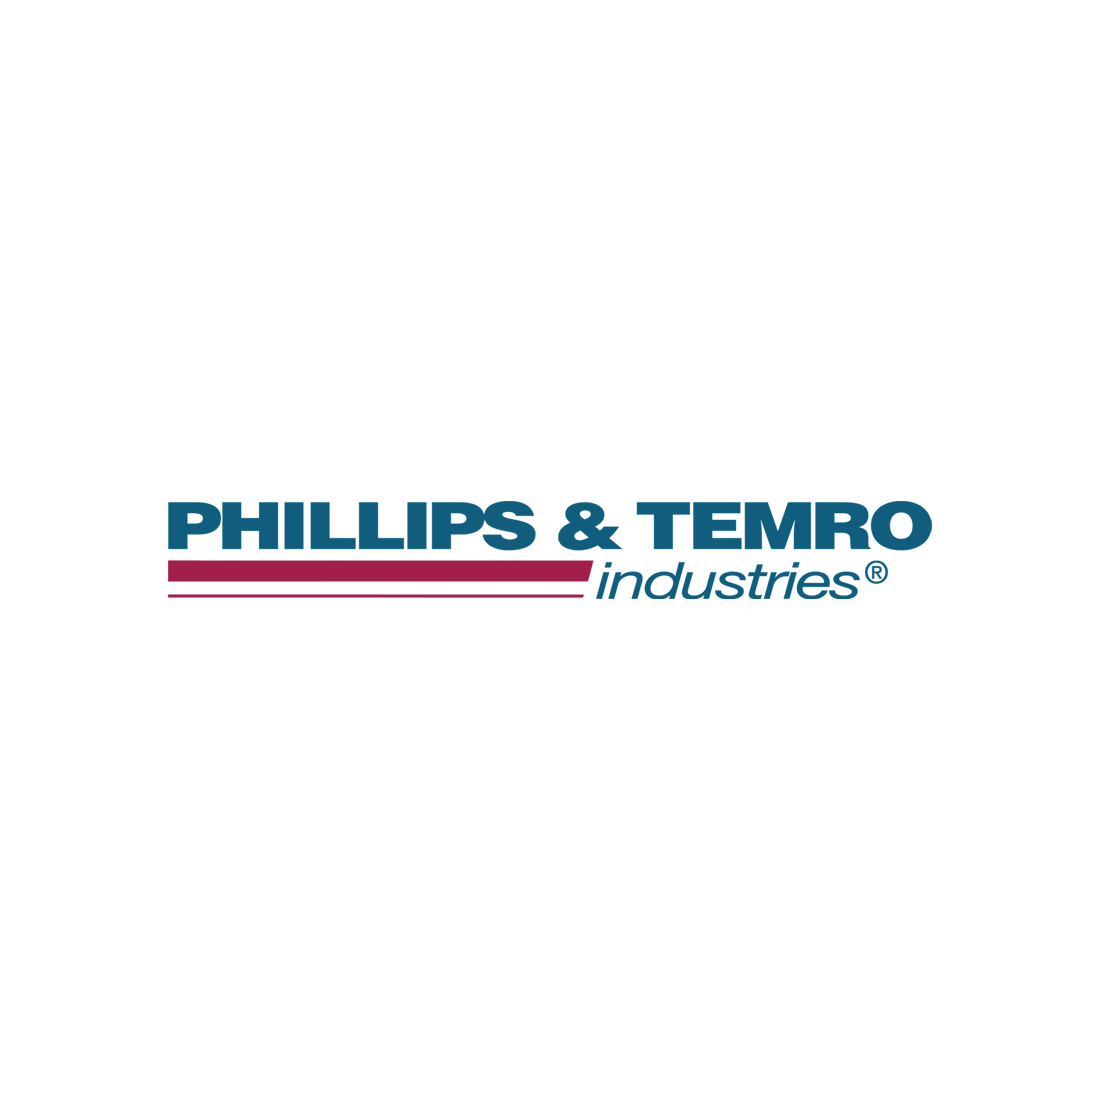 Phillips & Temro